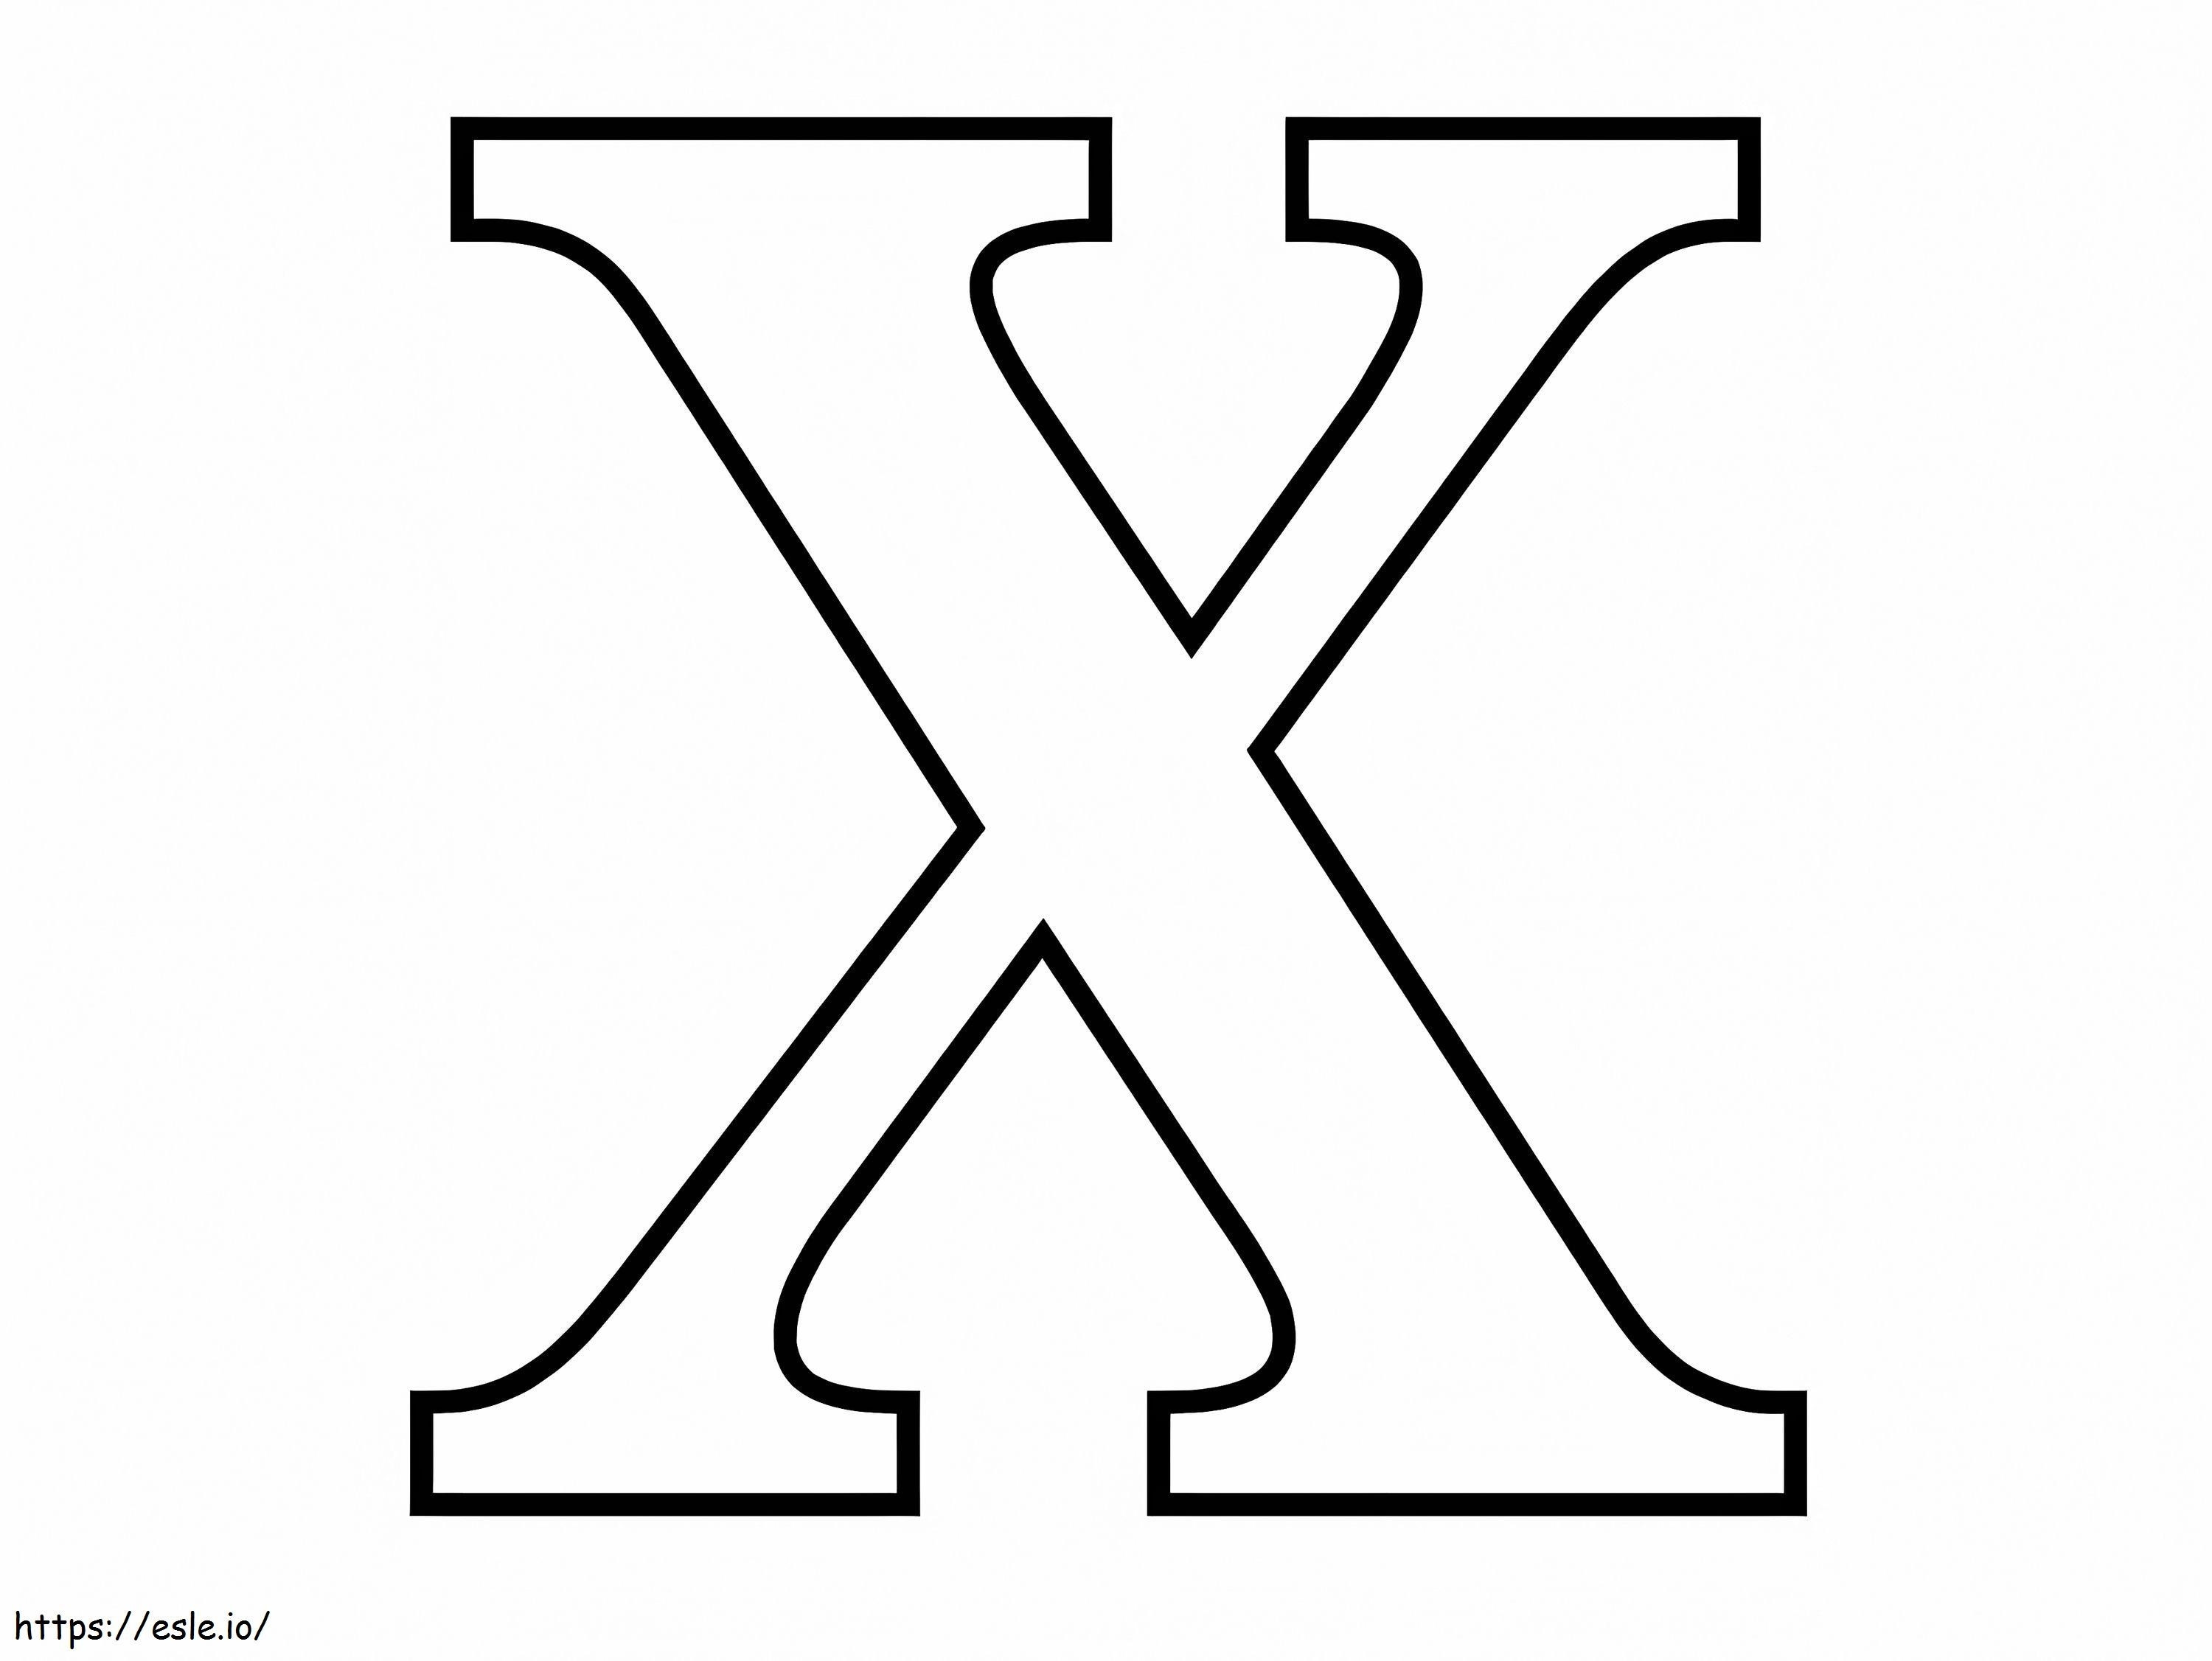 X betű 1 kifestő